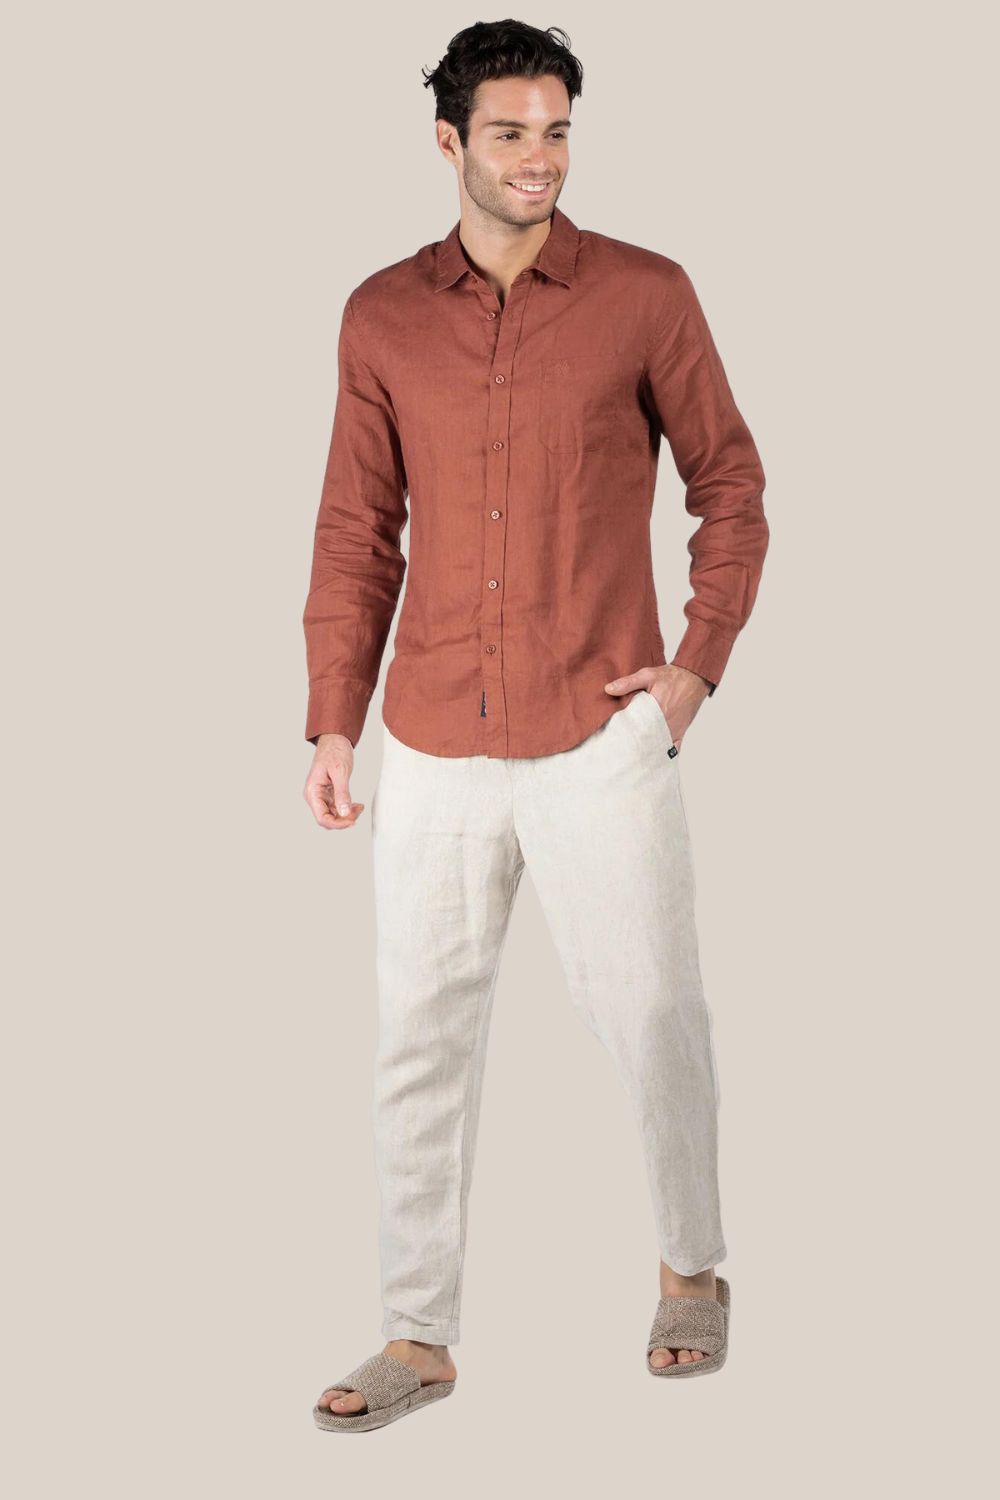 Coast Clothing Long Sleeve Linen Shirt